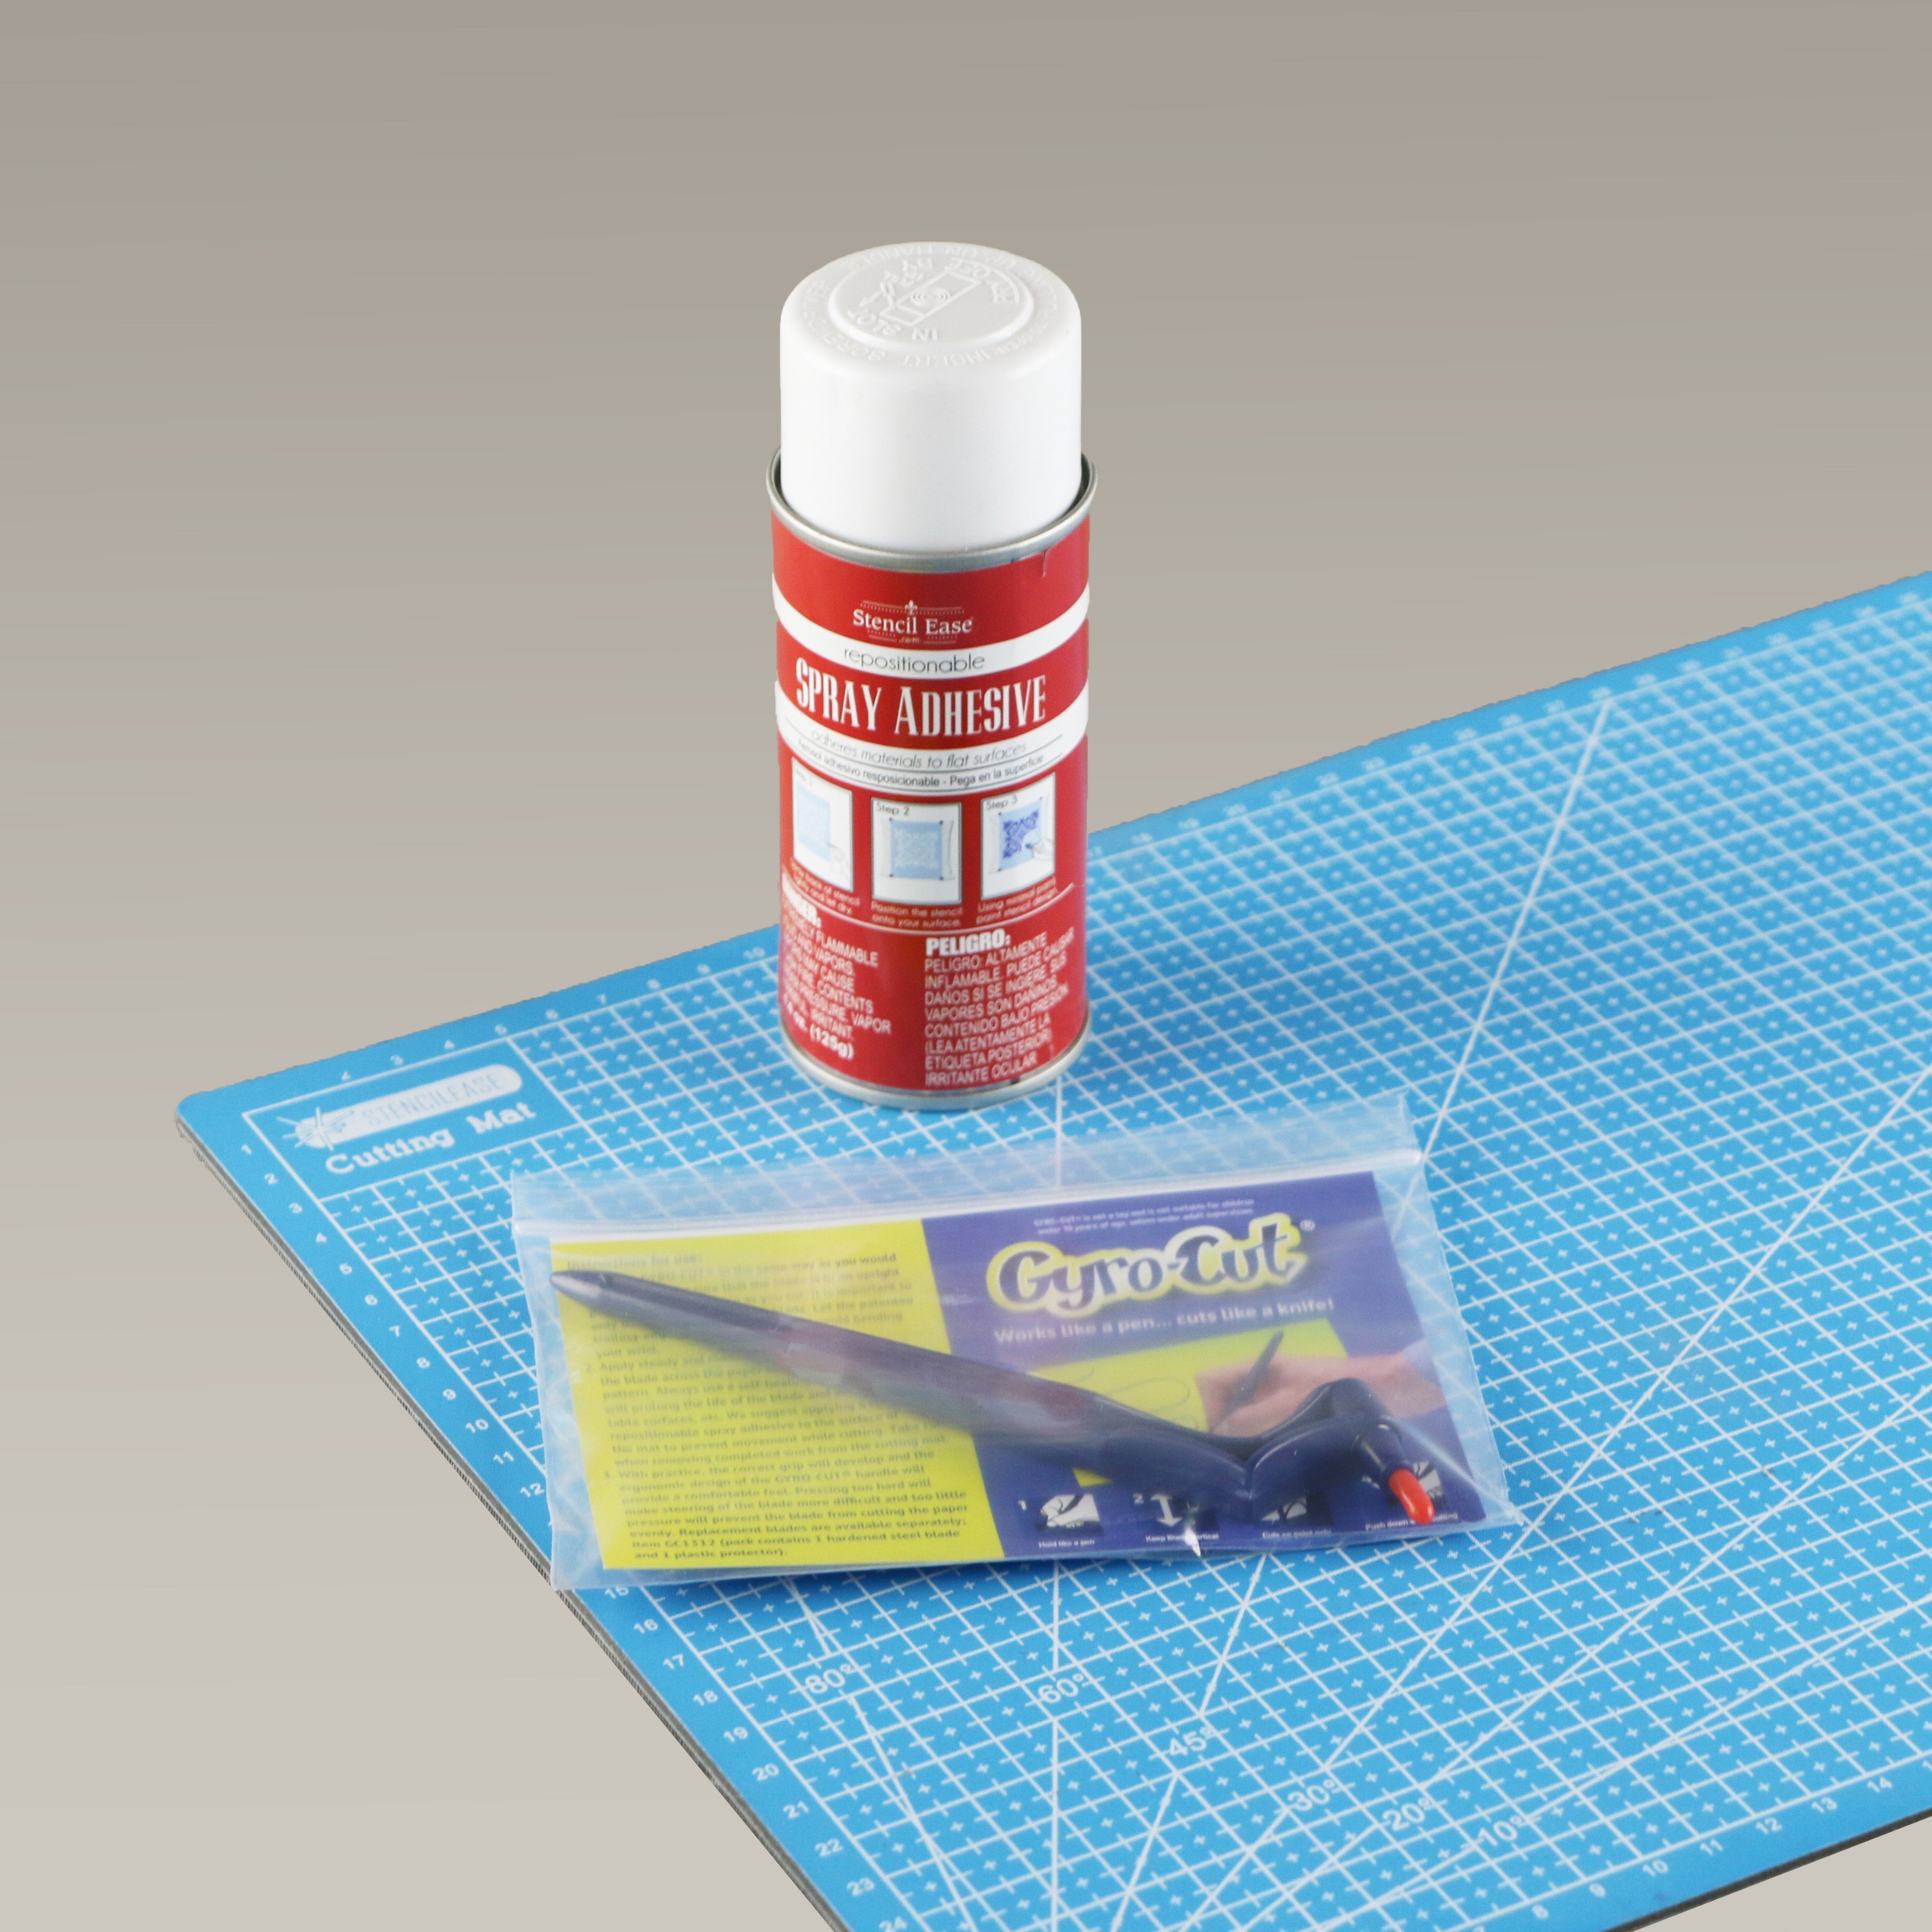 Gyro Cut Paper Cutting Kit